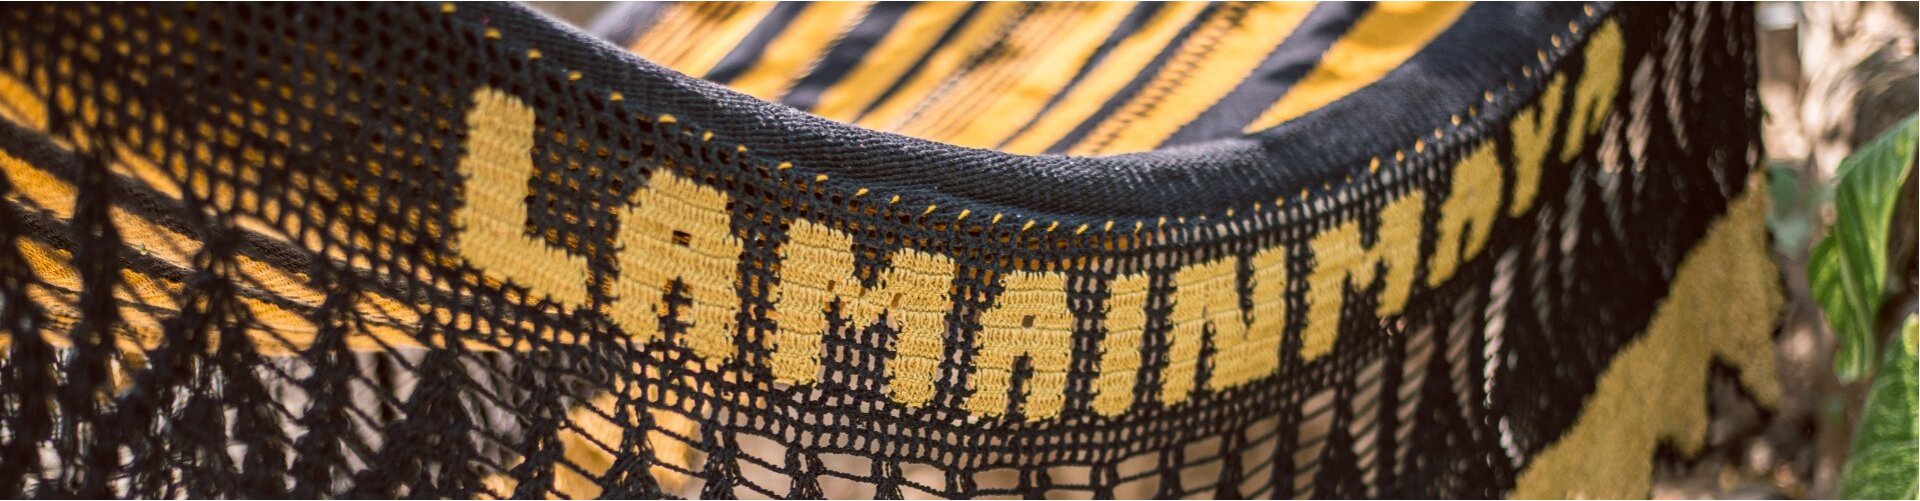 Hamac en coton fait à la main - Hamacs Traditionnels - La Main Maya